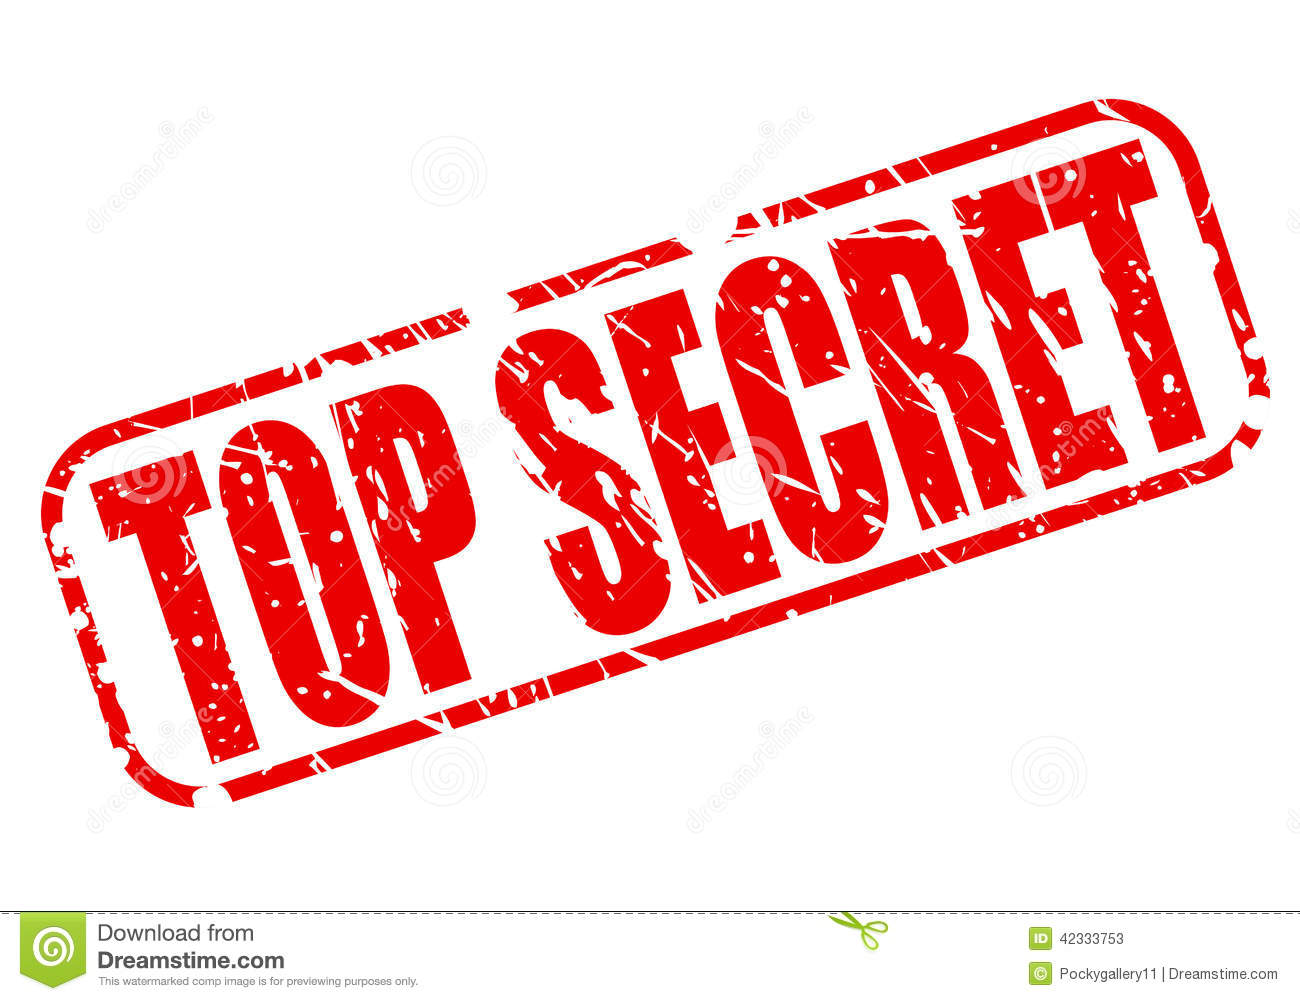 top secret: Top secret stamp